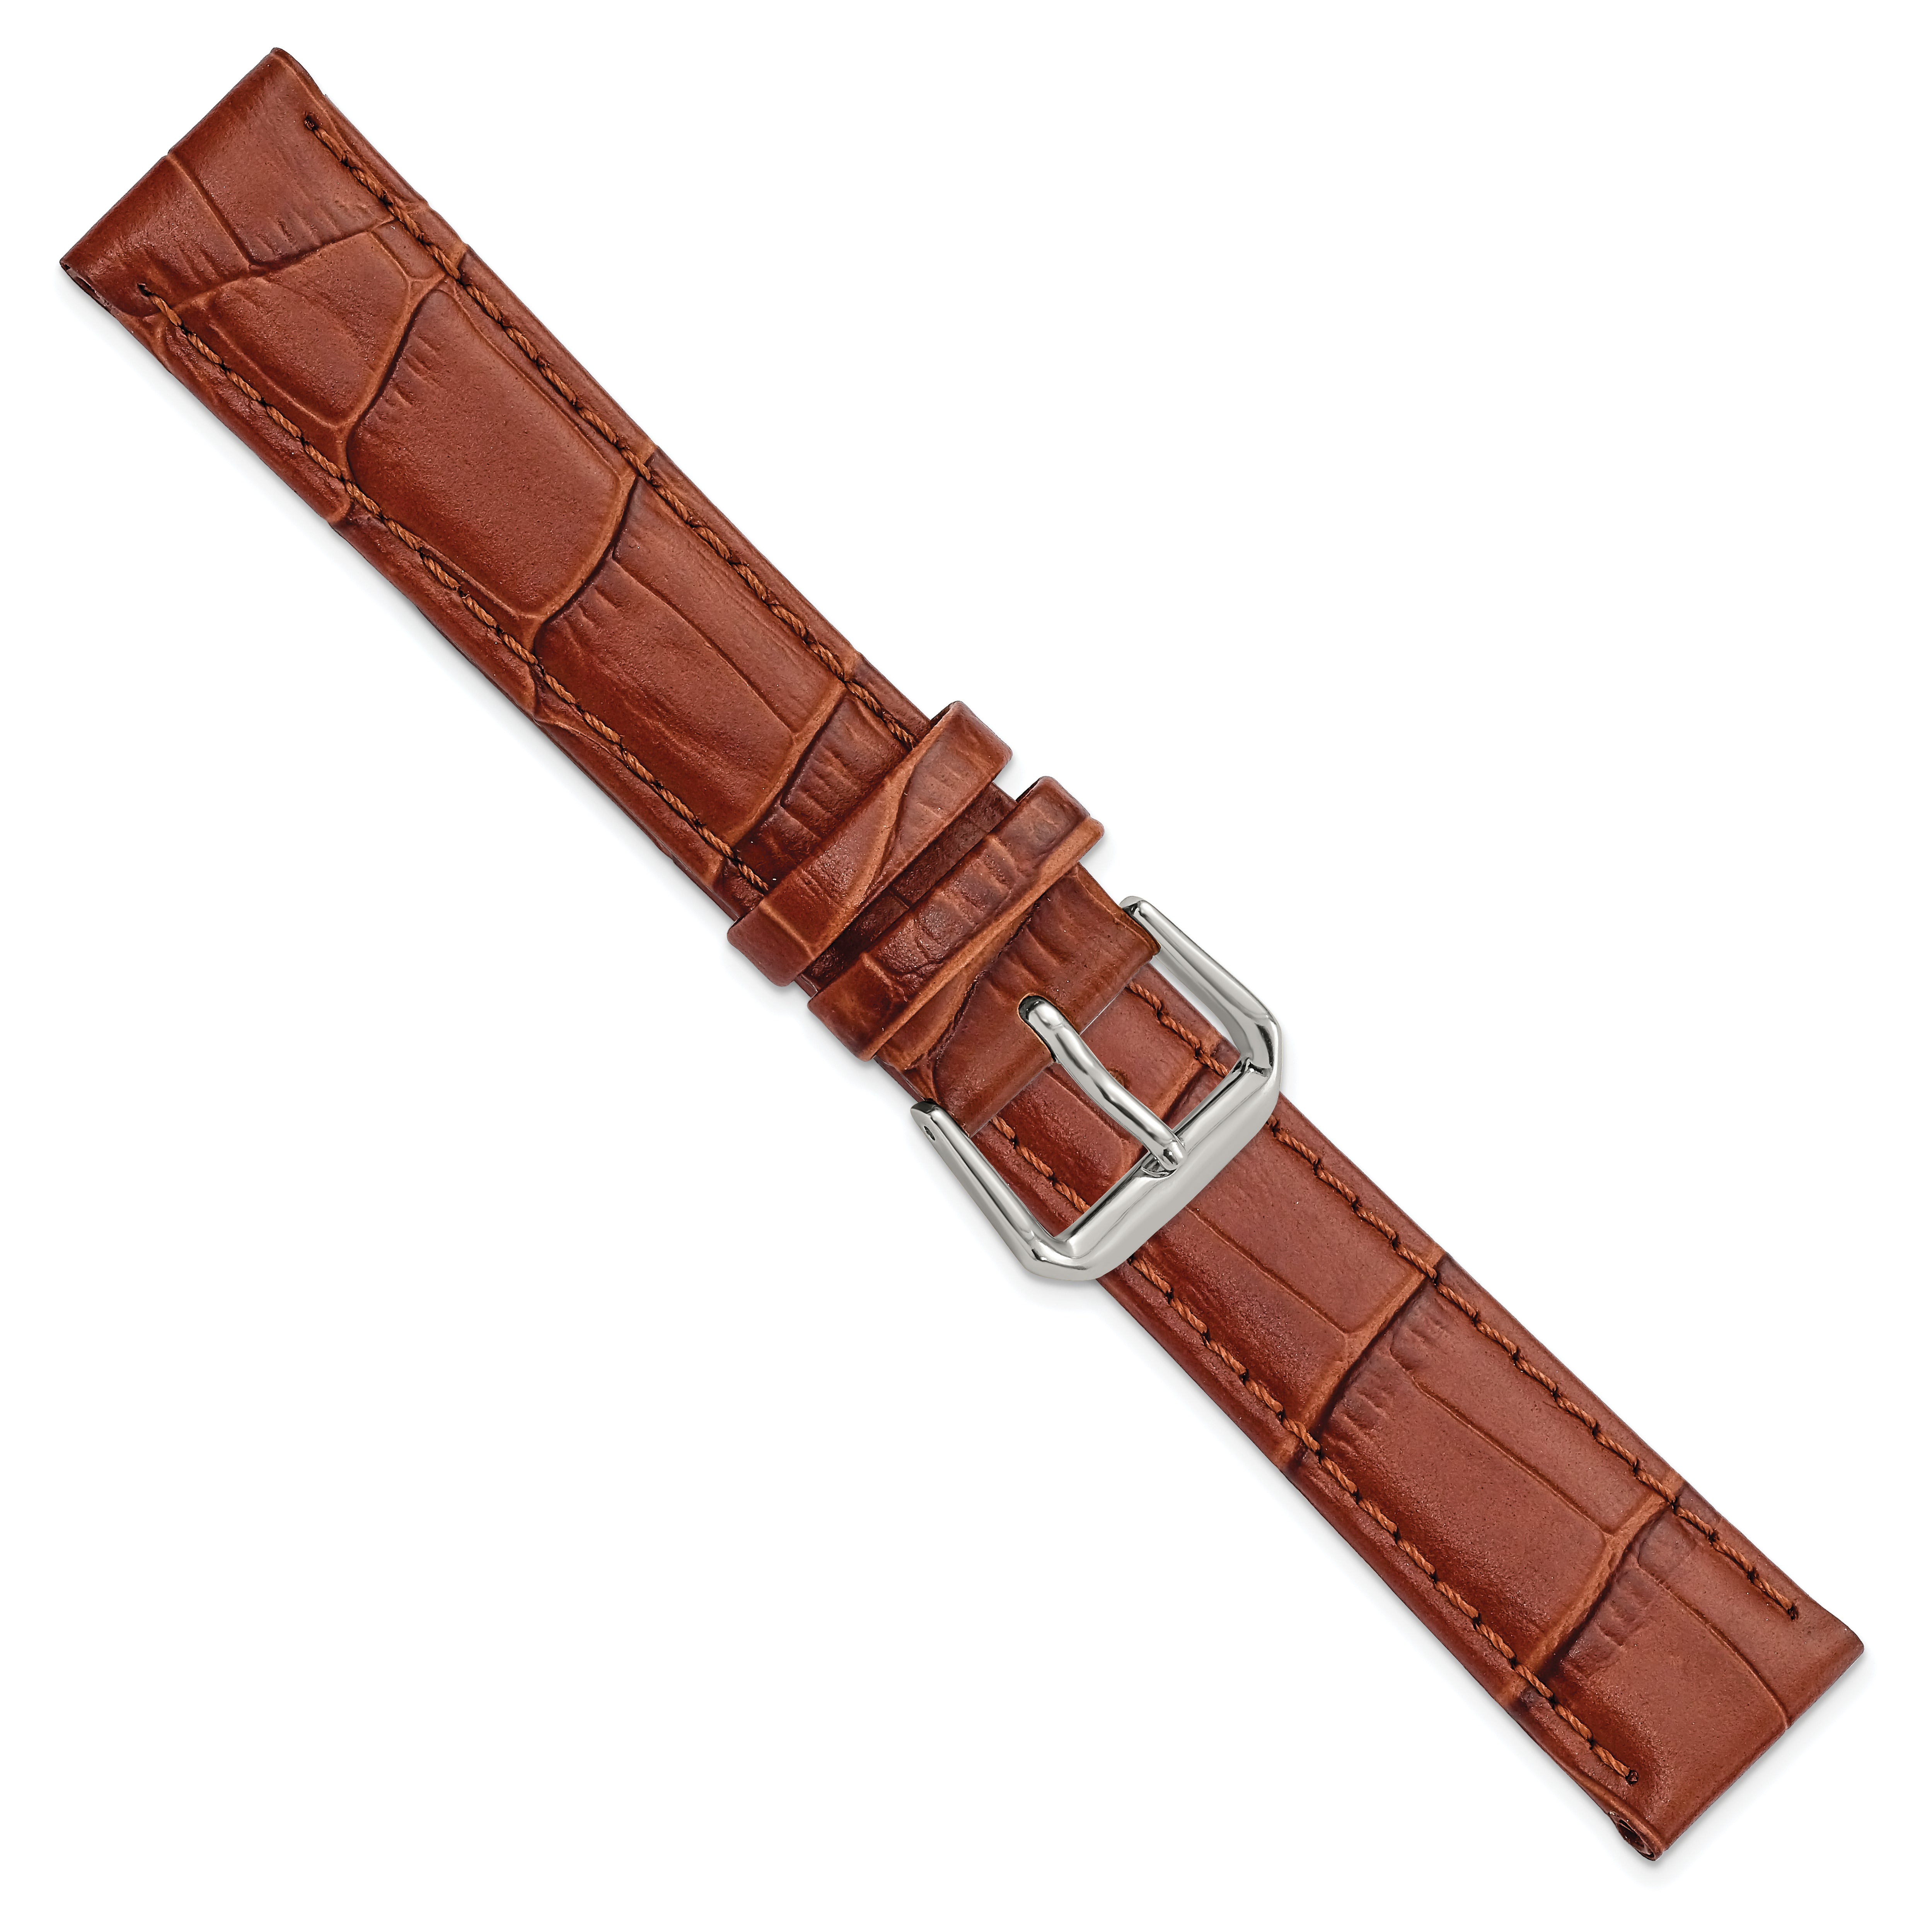 12mm Havana Brown Matte Wild Alligator Grain Leather with Silver-tone Buckle 6.75 inch Watch Band